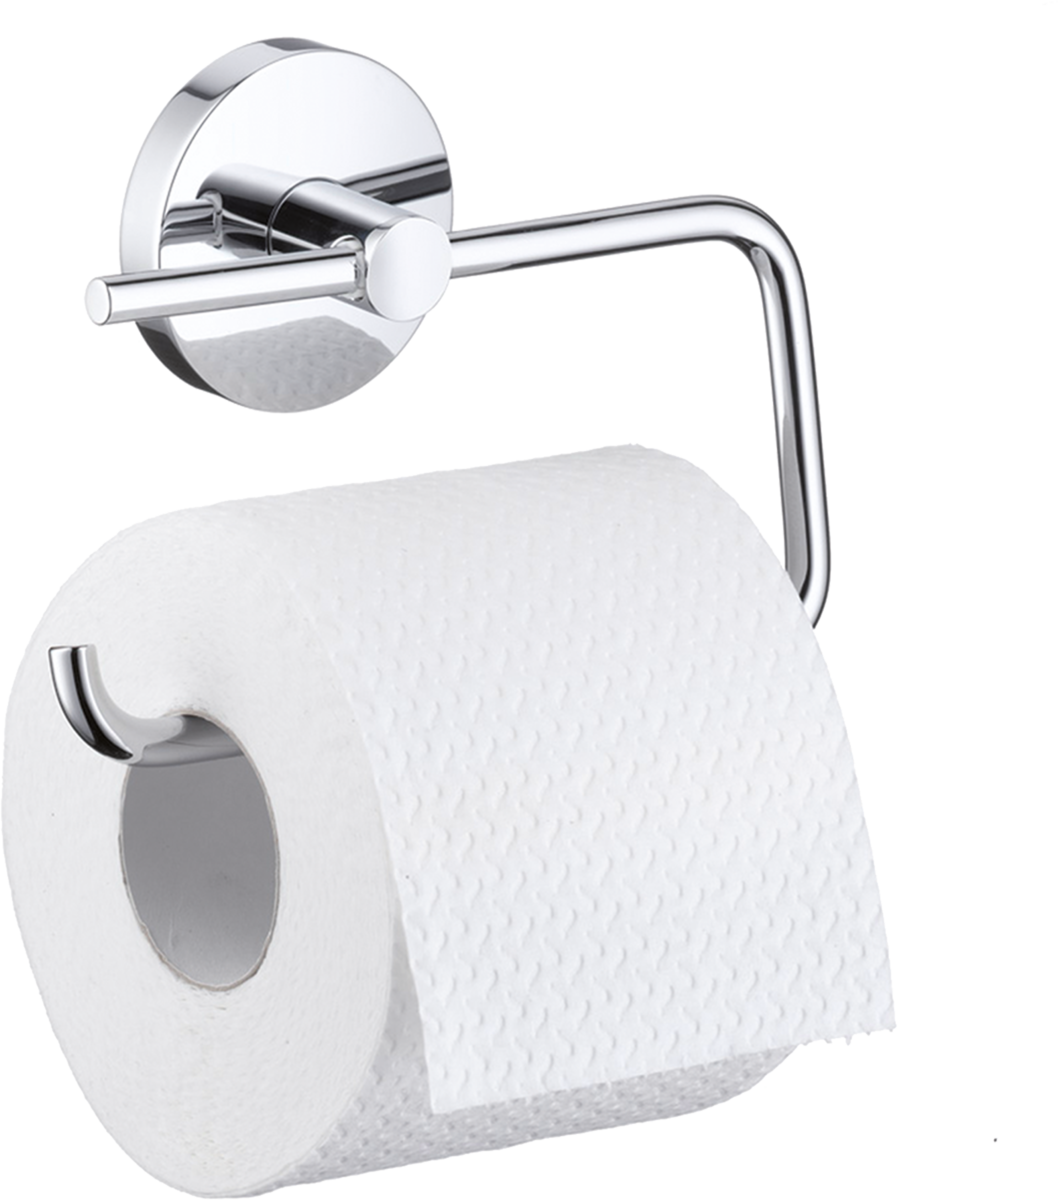 HANSGROHE Logis Tuvalet kağıtlığı kapaksız krom 40526000 resmi